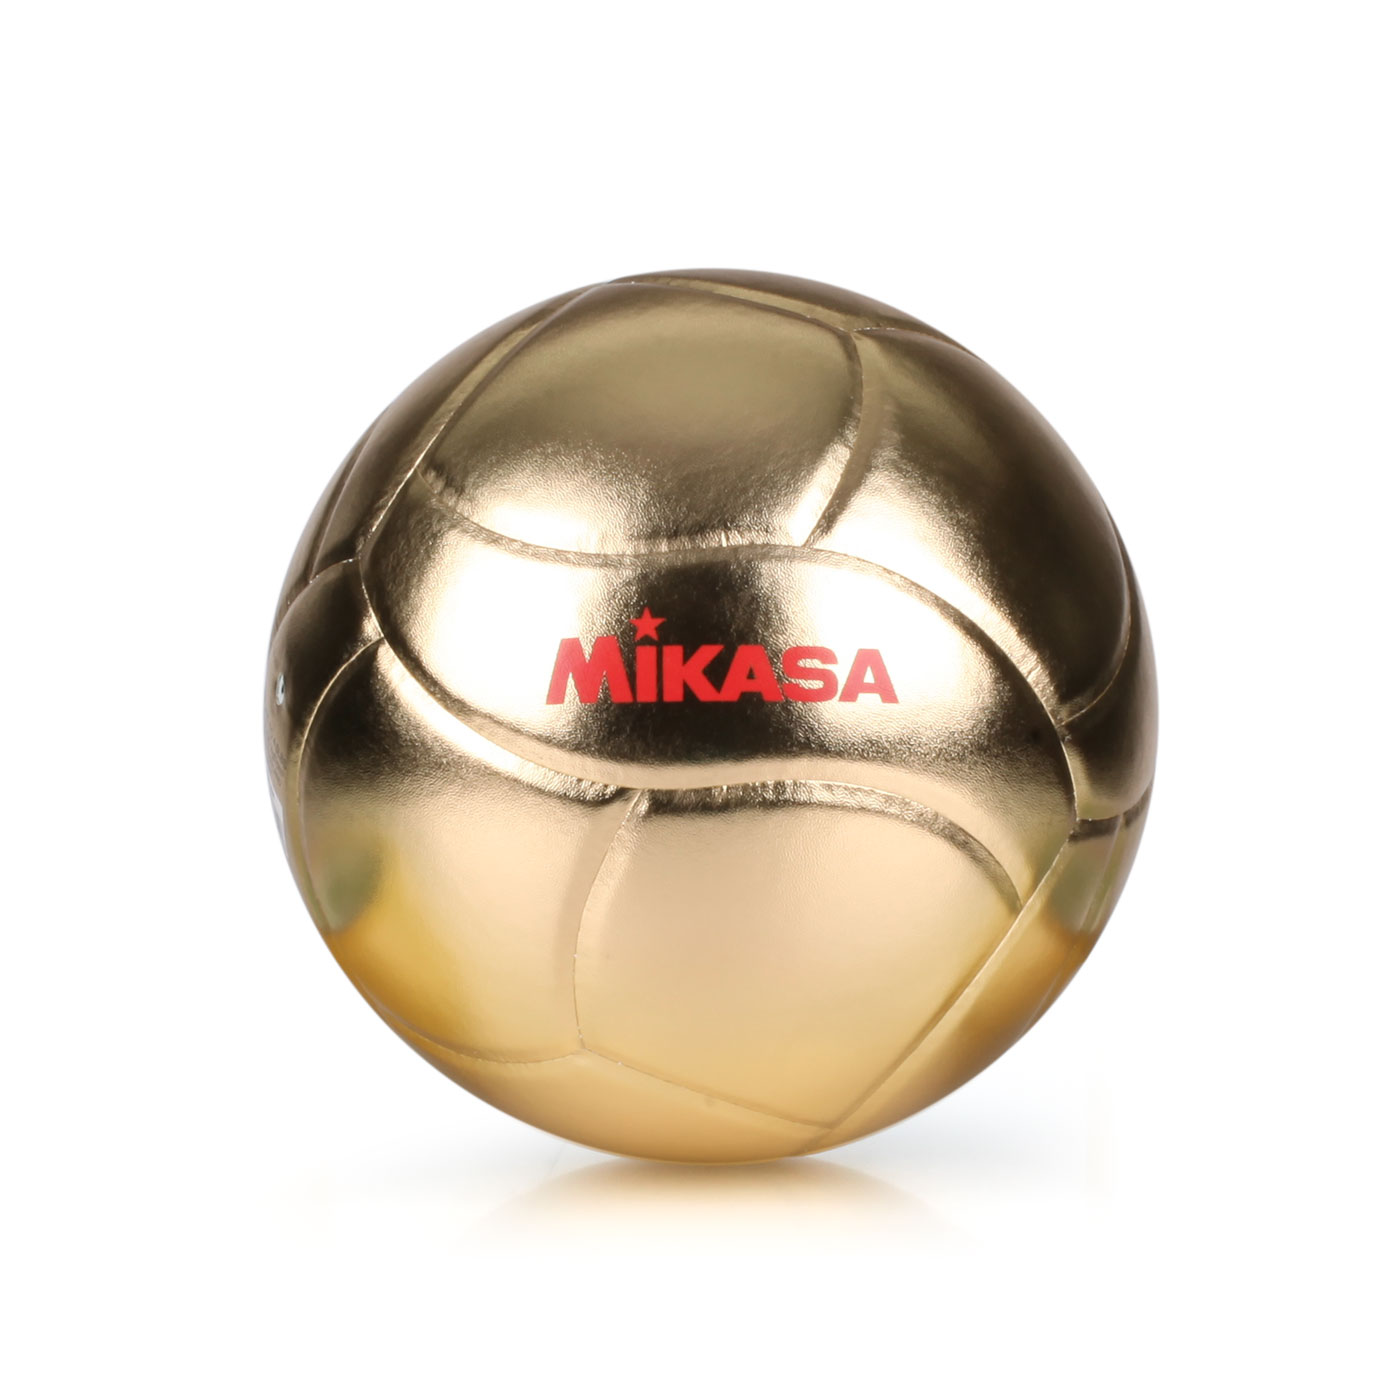 MIKASA 紀念排球#5 MKVG018W - 金